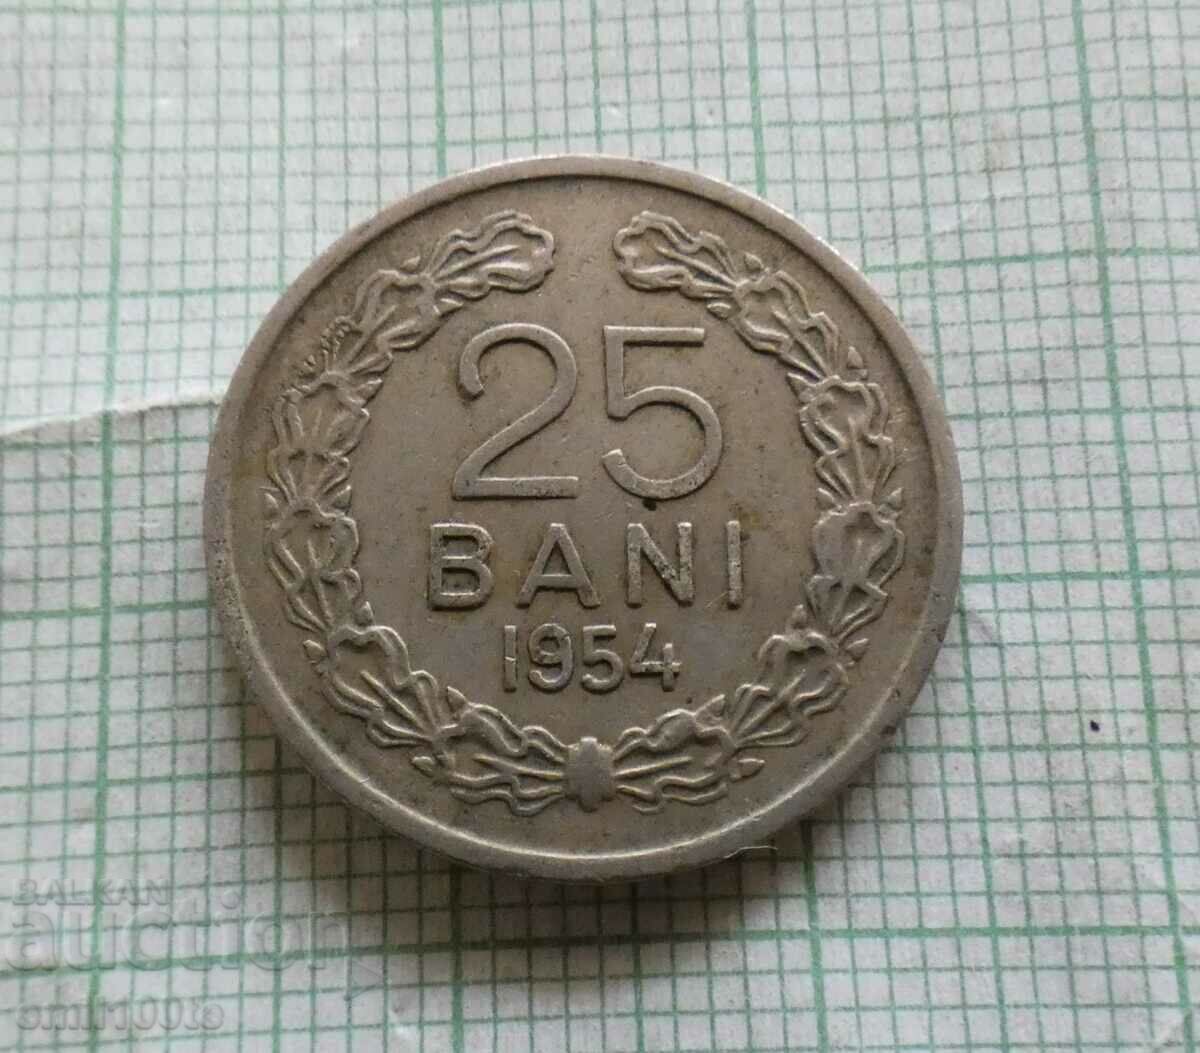 25 de băi 1954 România